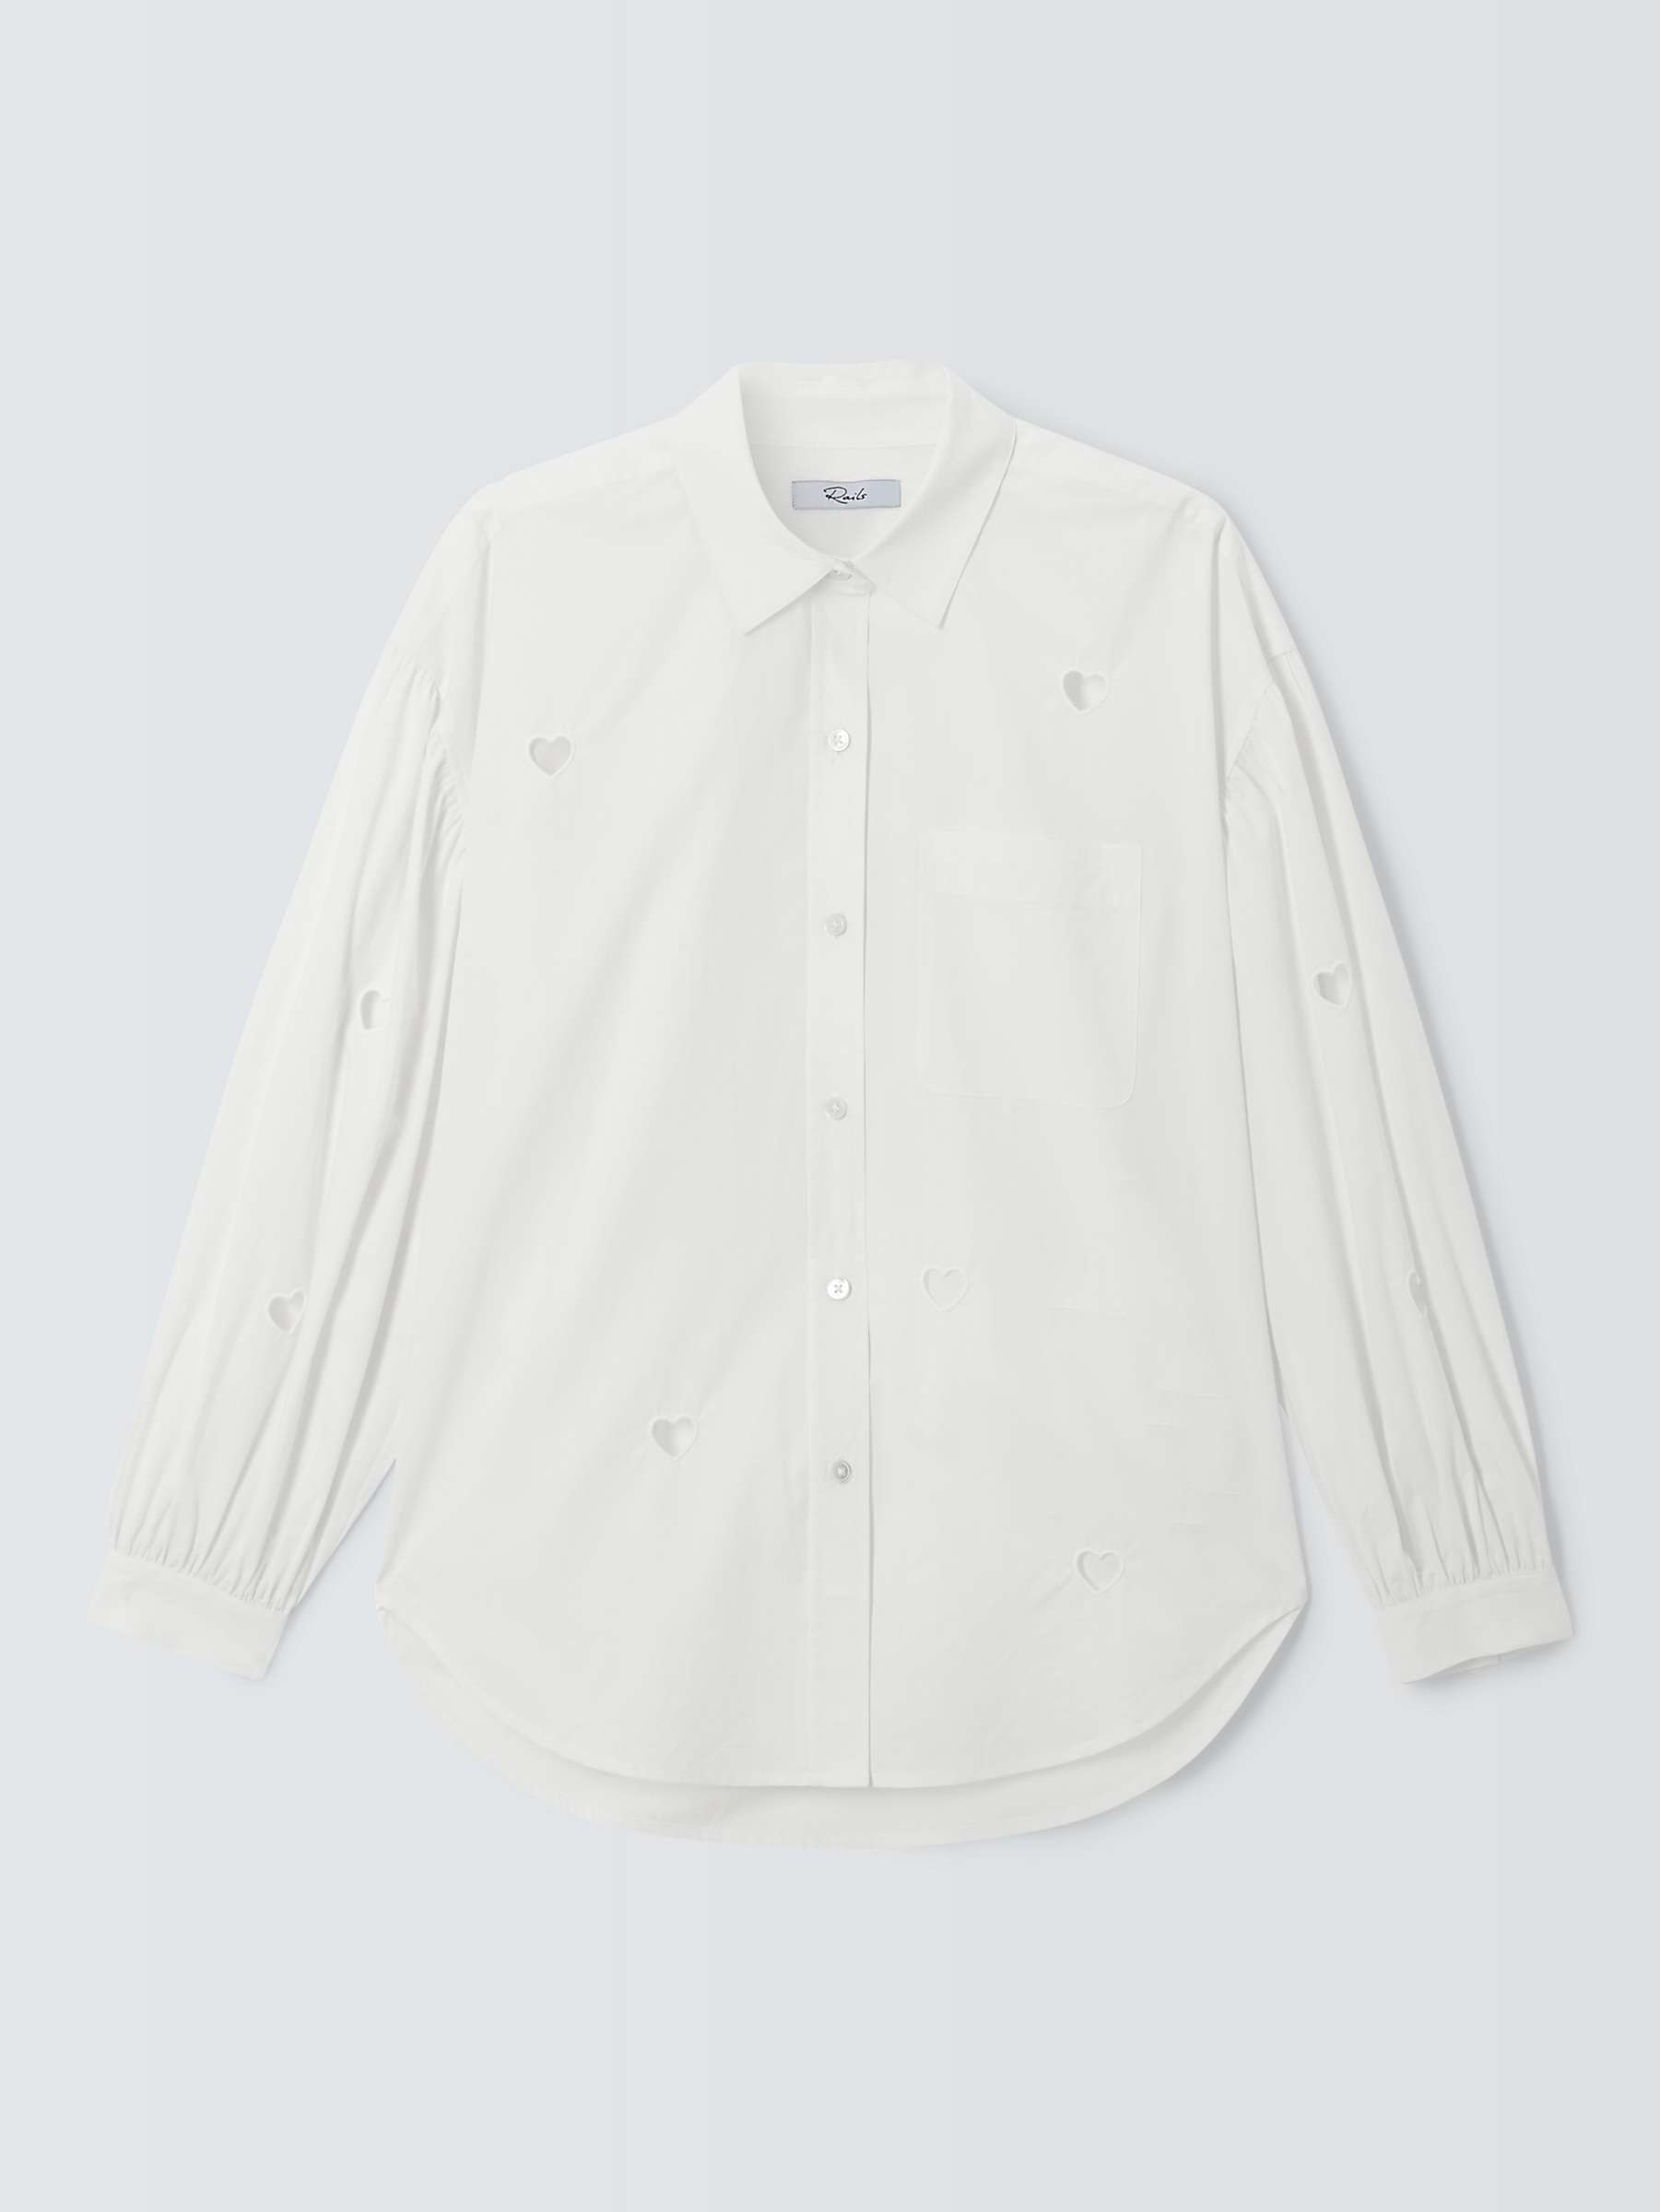 Buy Rails Janae Eyelet Heart Cotton Shirt, White Online at johnlewis.com